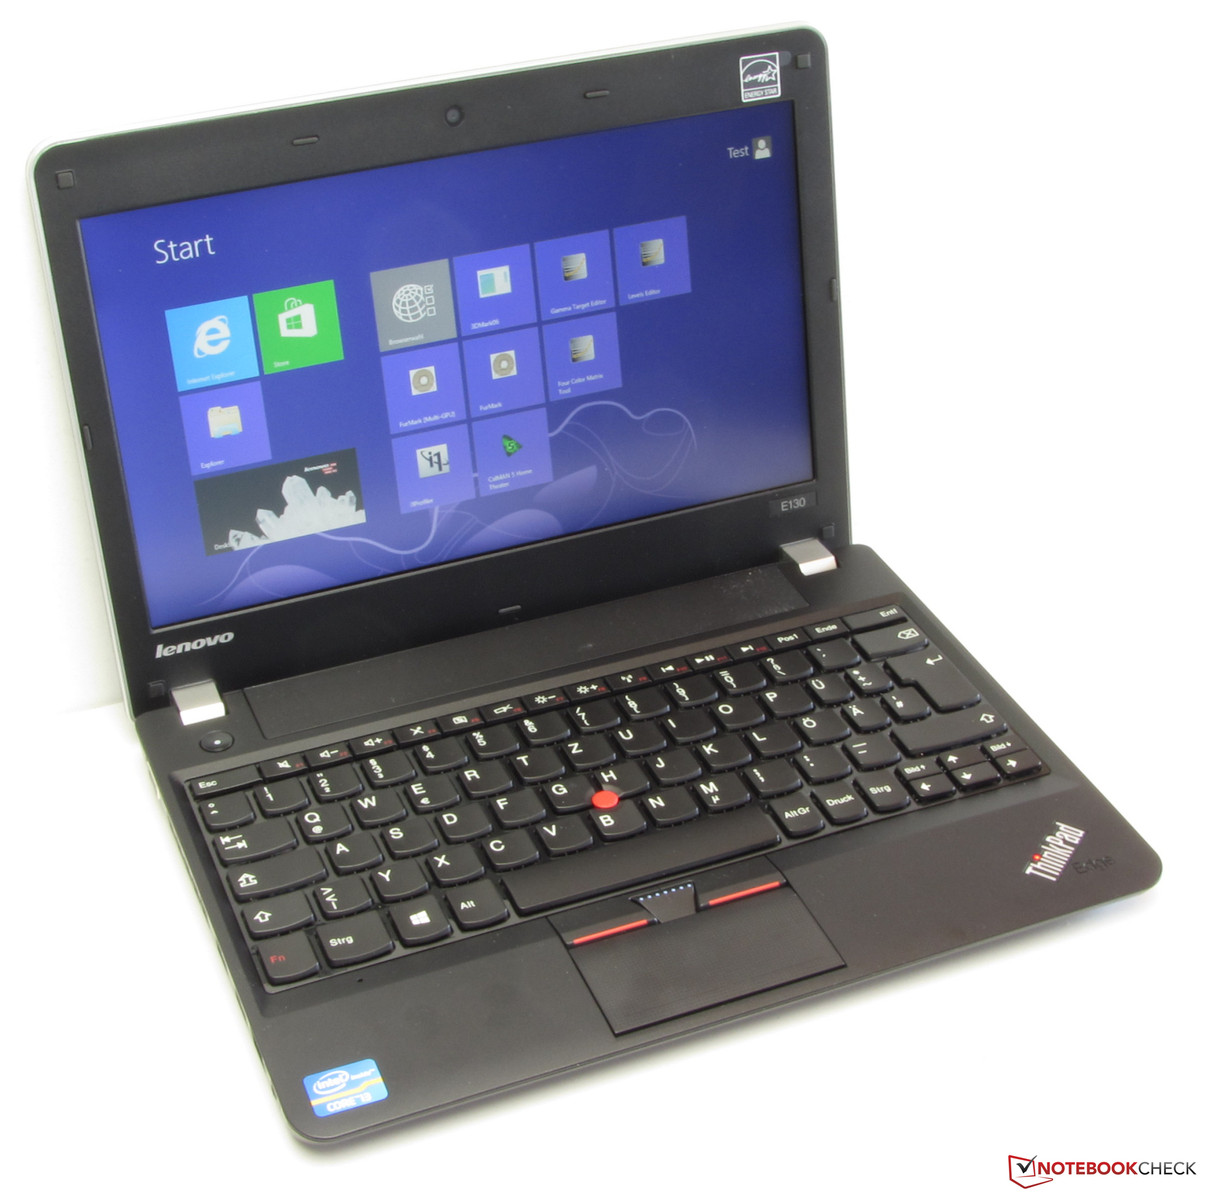 Review Lenovo Thinkpad Edge E130 Nzuaxmb Notebook - Notebookcheck.net Reviews